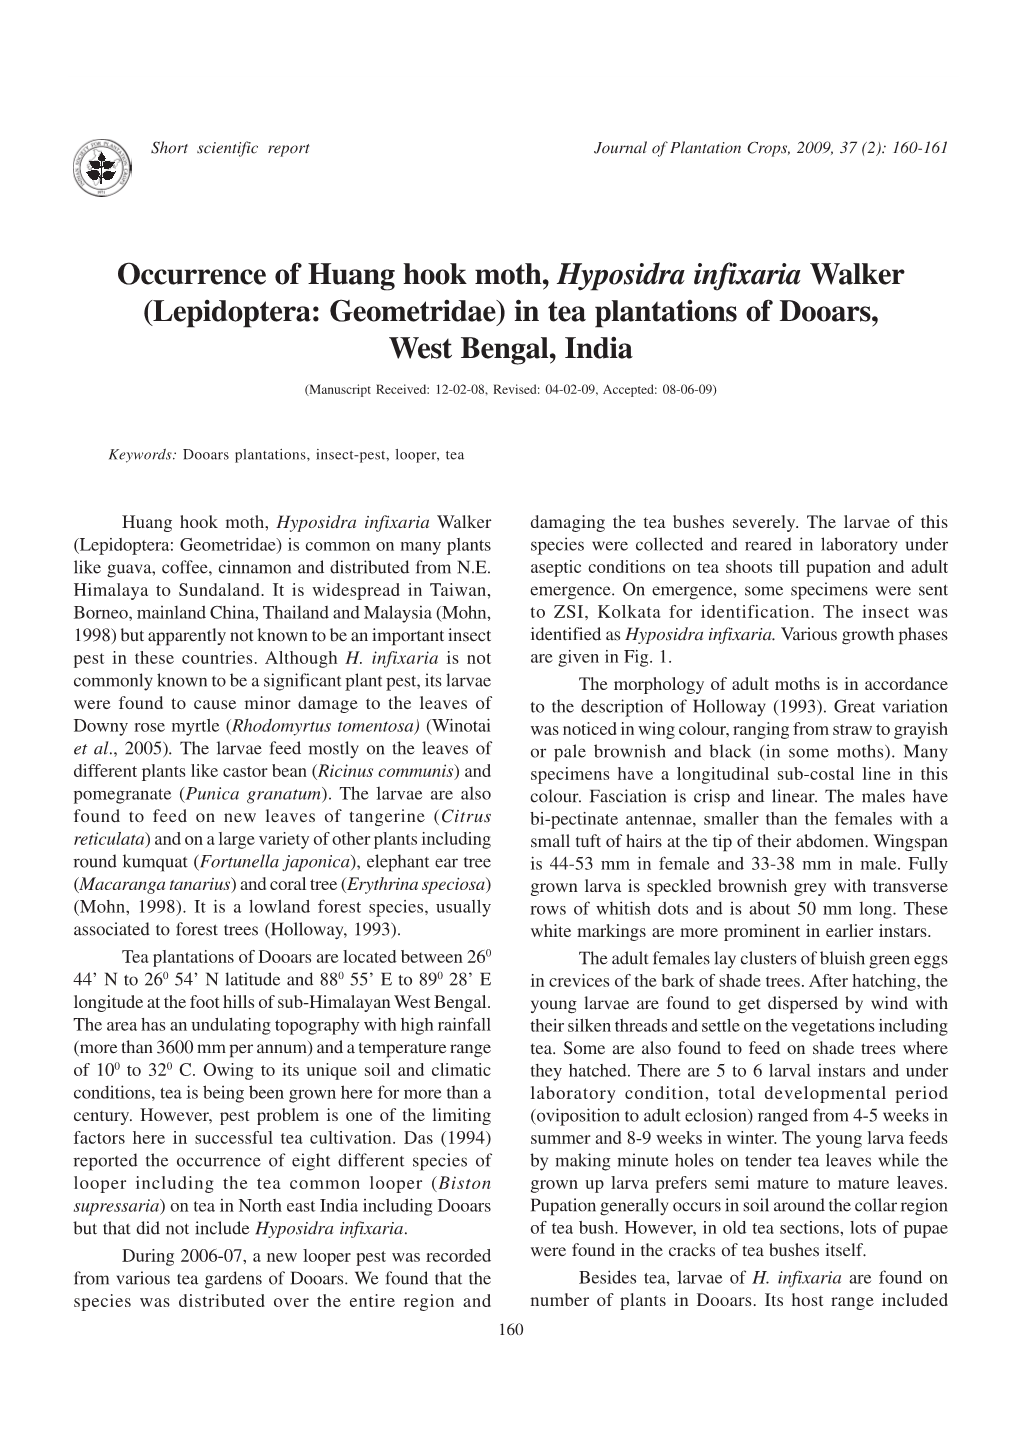 Occurrence of Huang Hook Moth, Hyposidra Infixaria Walker (Lepidoptera: Geometridae) in Tea Plantations of Dooars, West Bengal, India